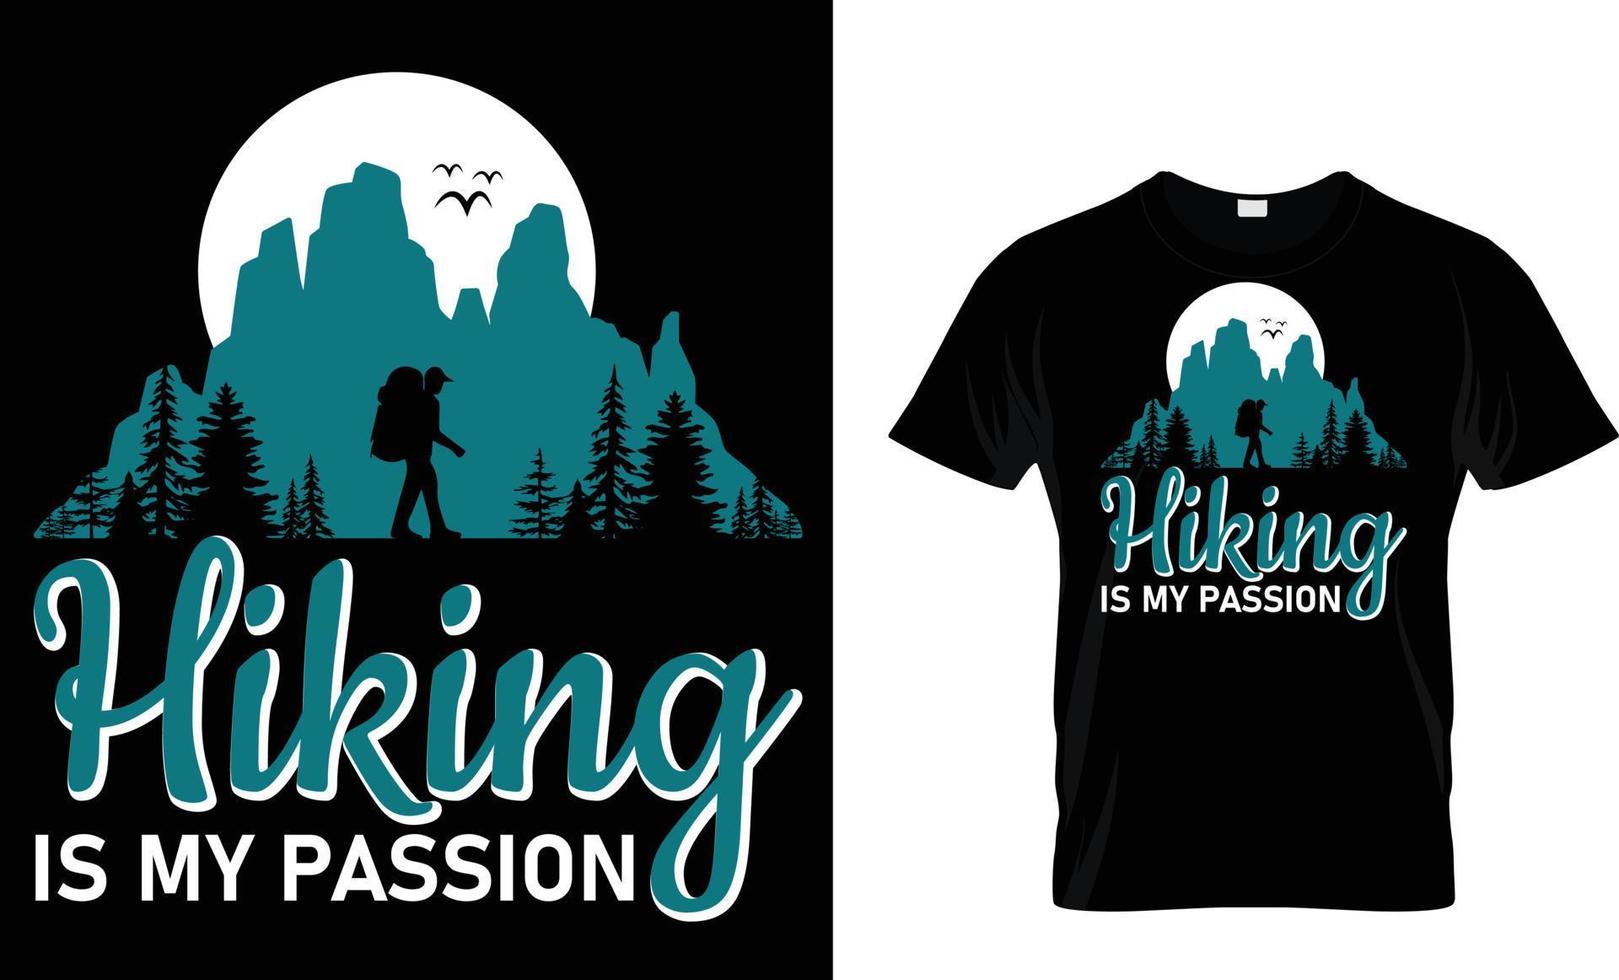 Abenteuer, Berg, wandern, Camping, Typografie, Vektor T-Shirt Design